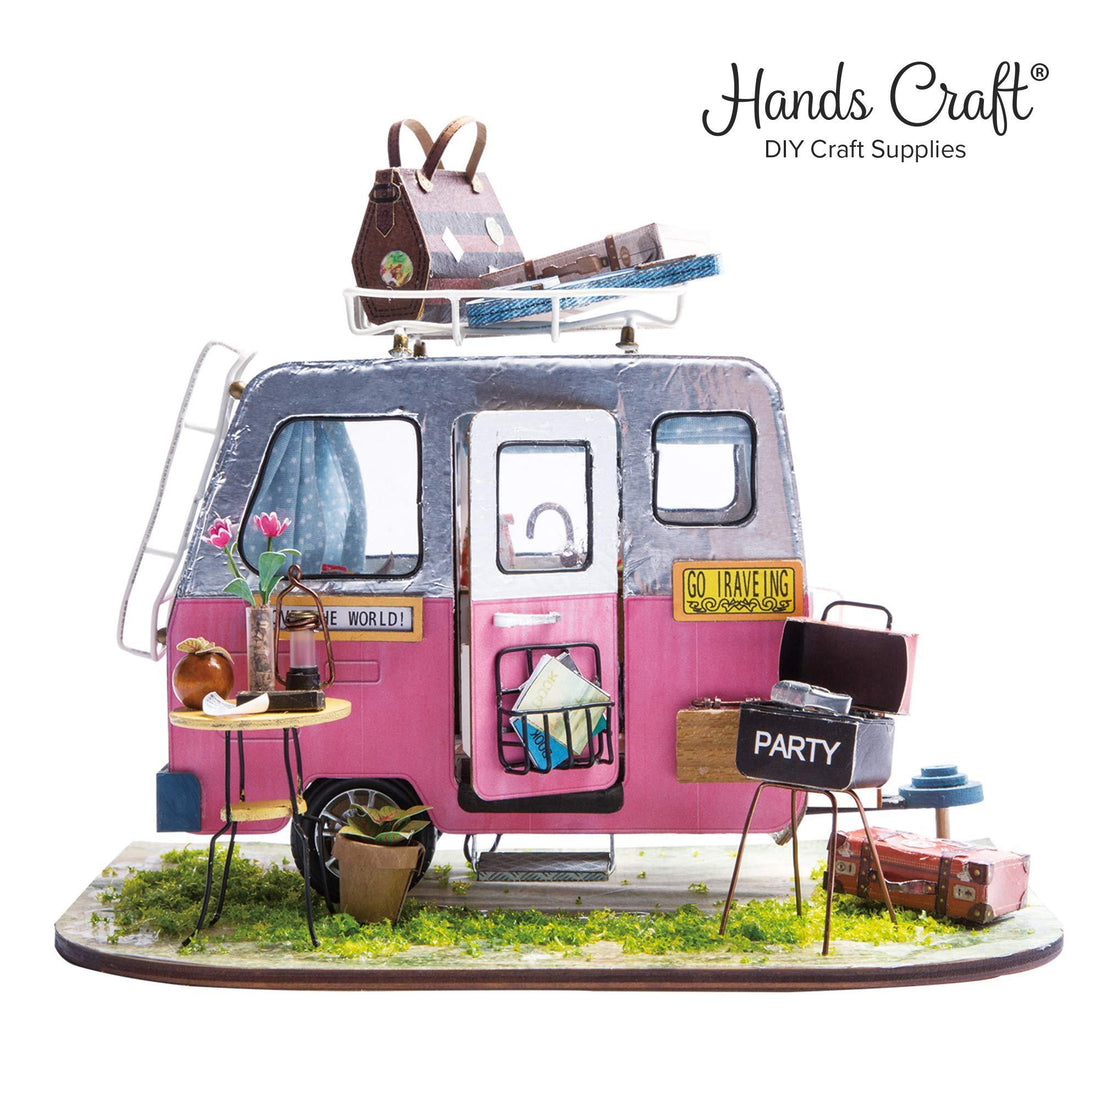 Happy Camper Miniature Wooden Dollhouse - Kitty Hawk Kites Online Store